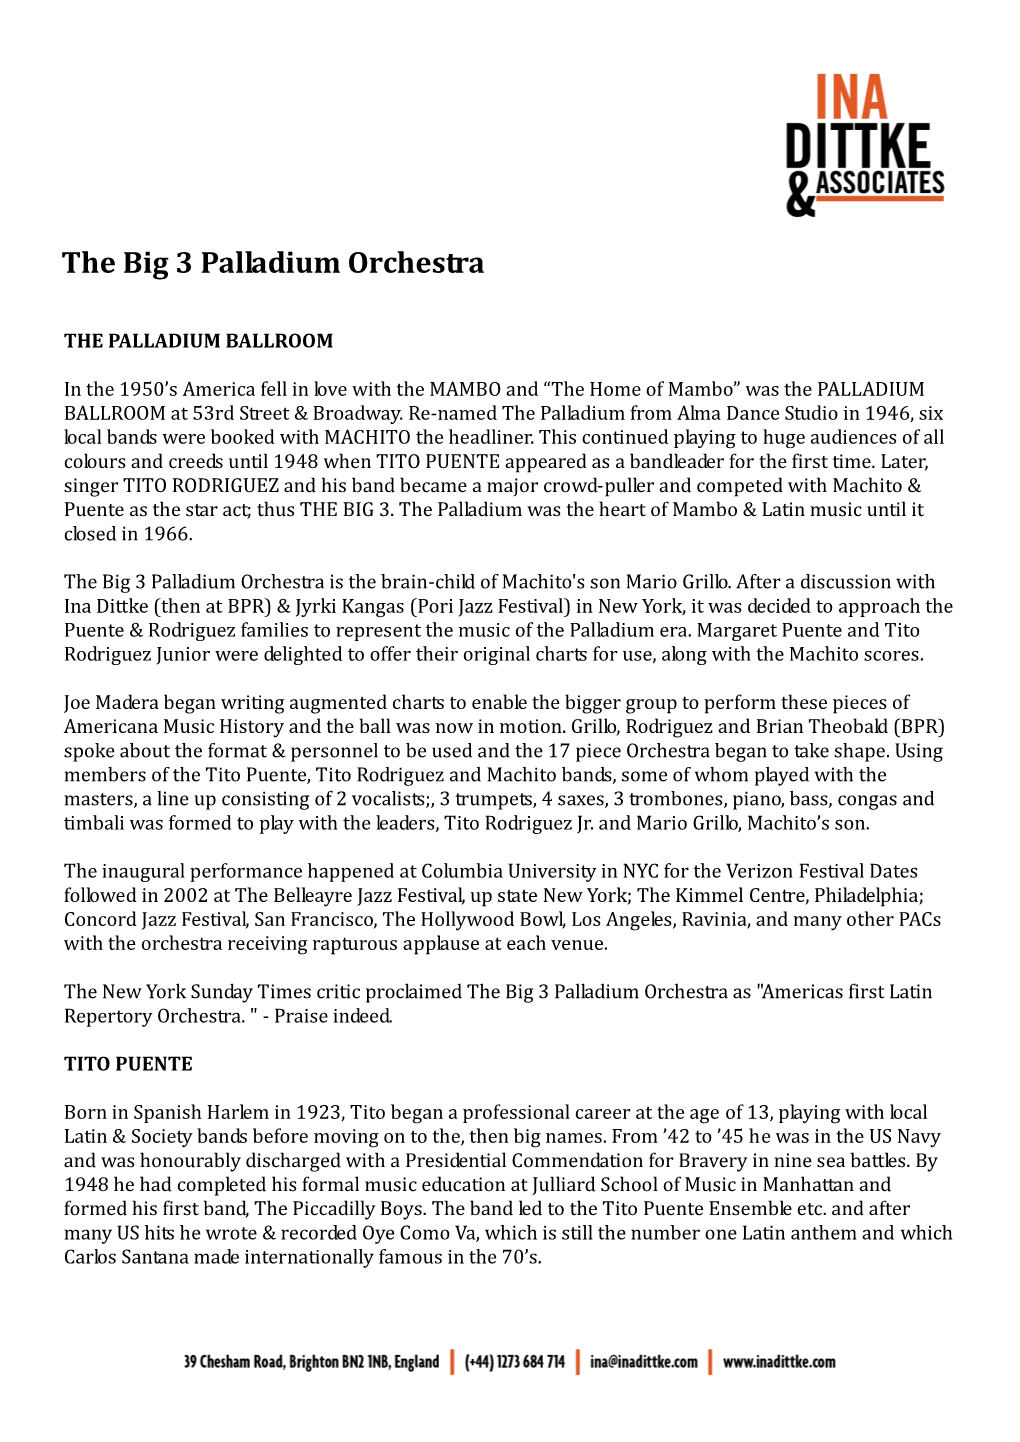 The Big 3 Palladium Orchestra